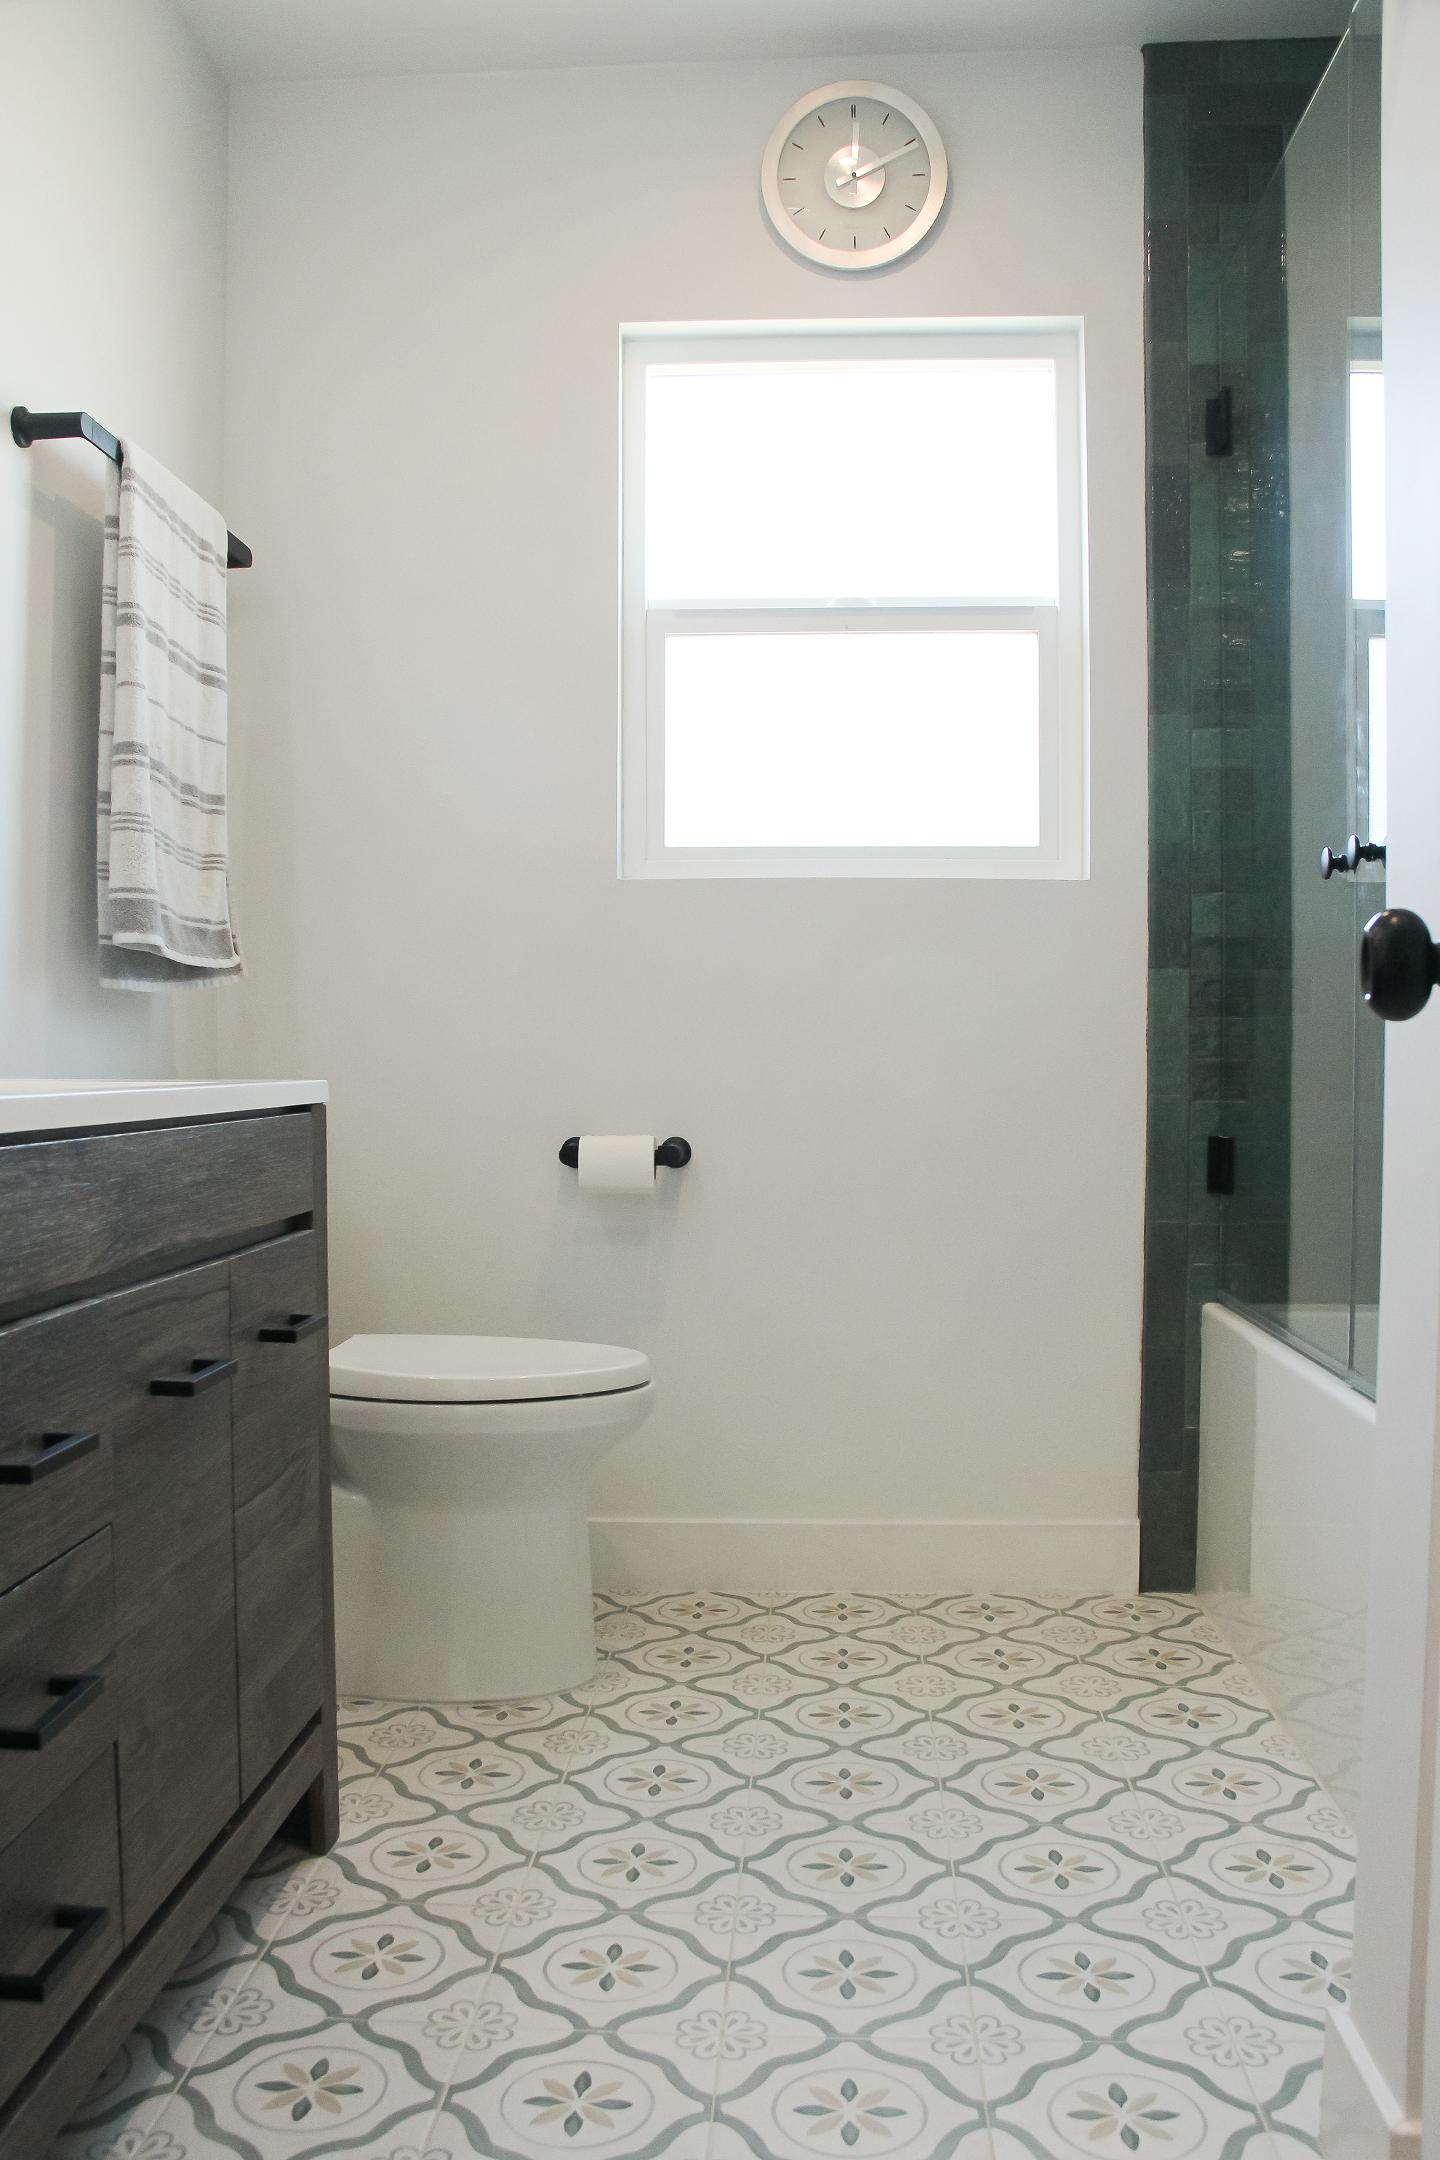 Modern bathroom interior with patterned floor tiles.